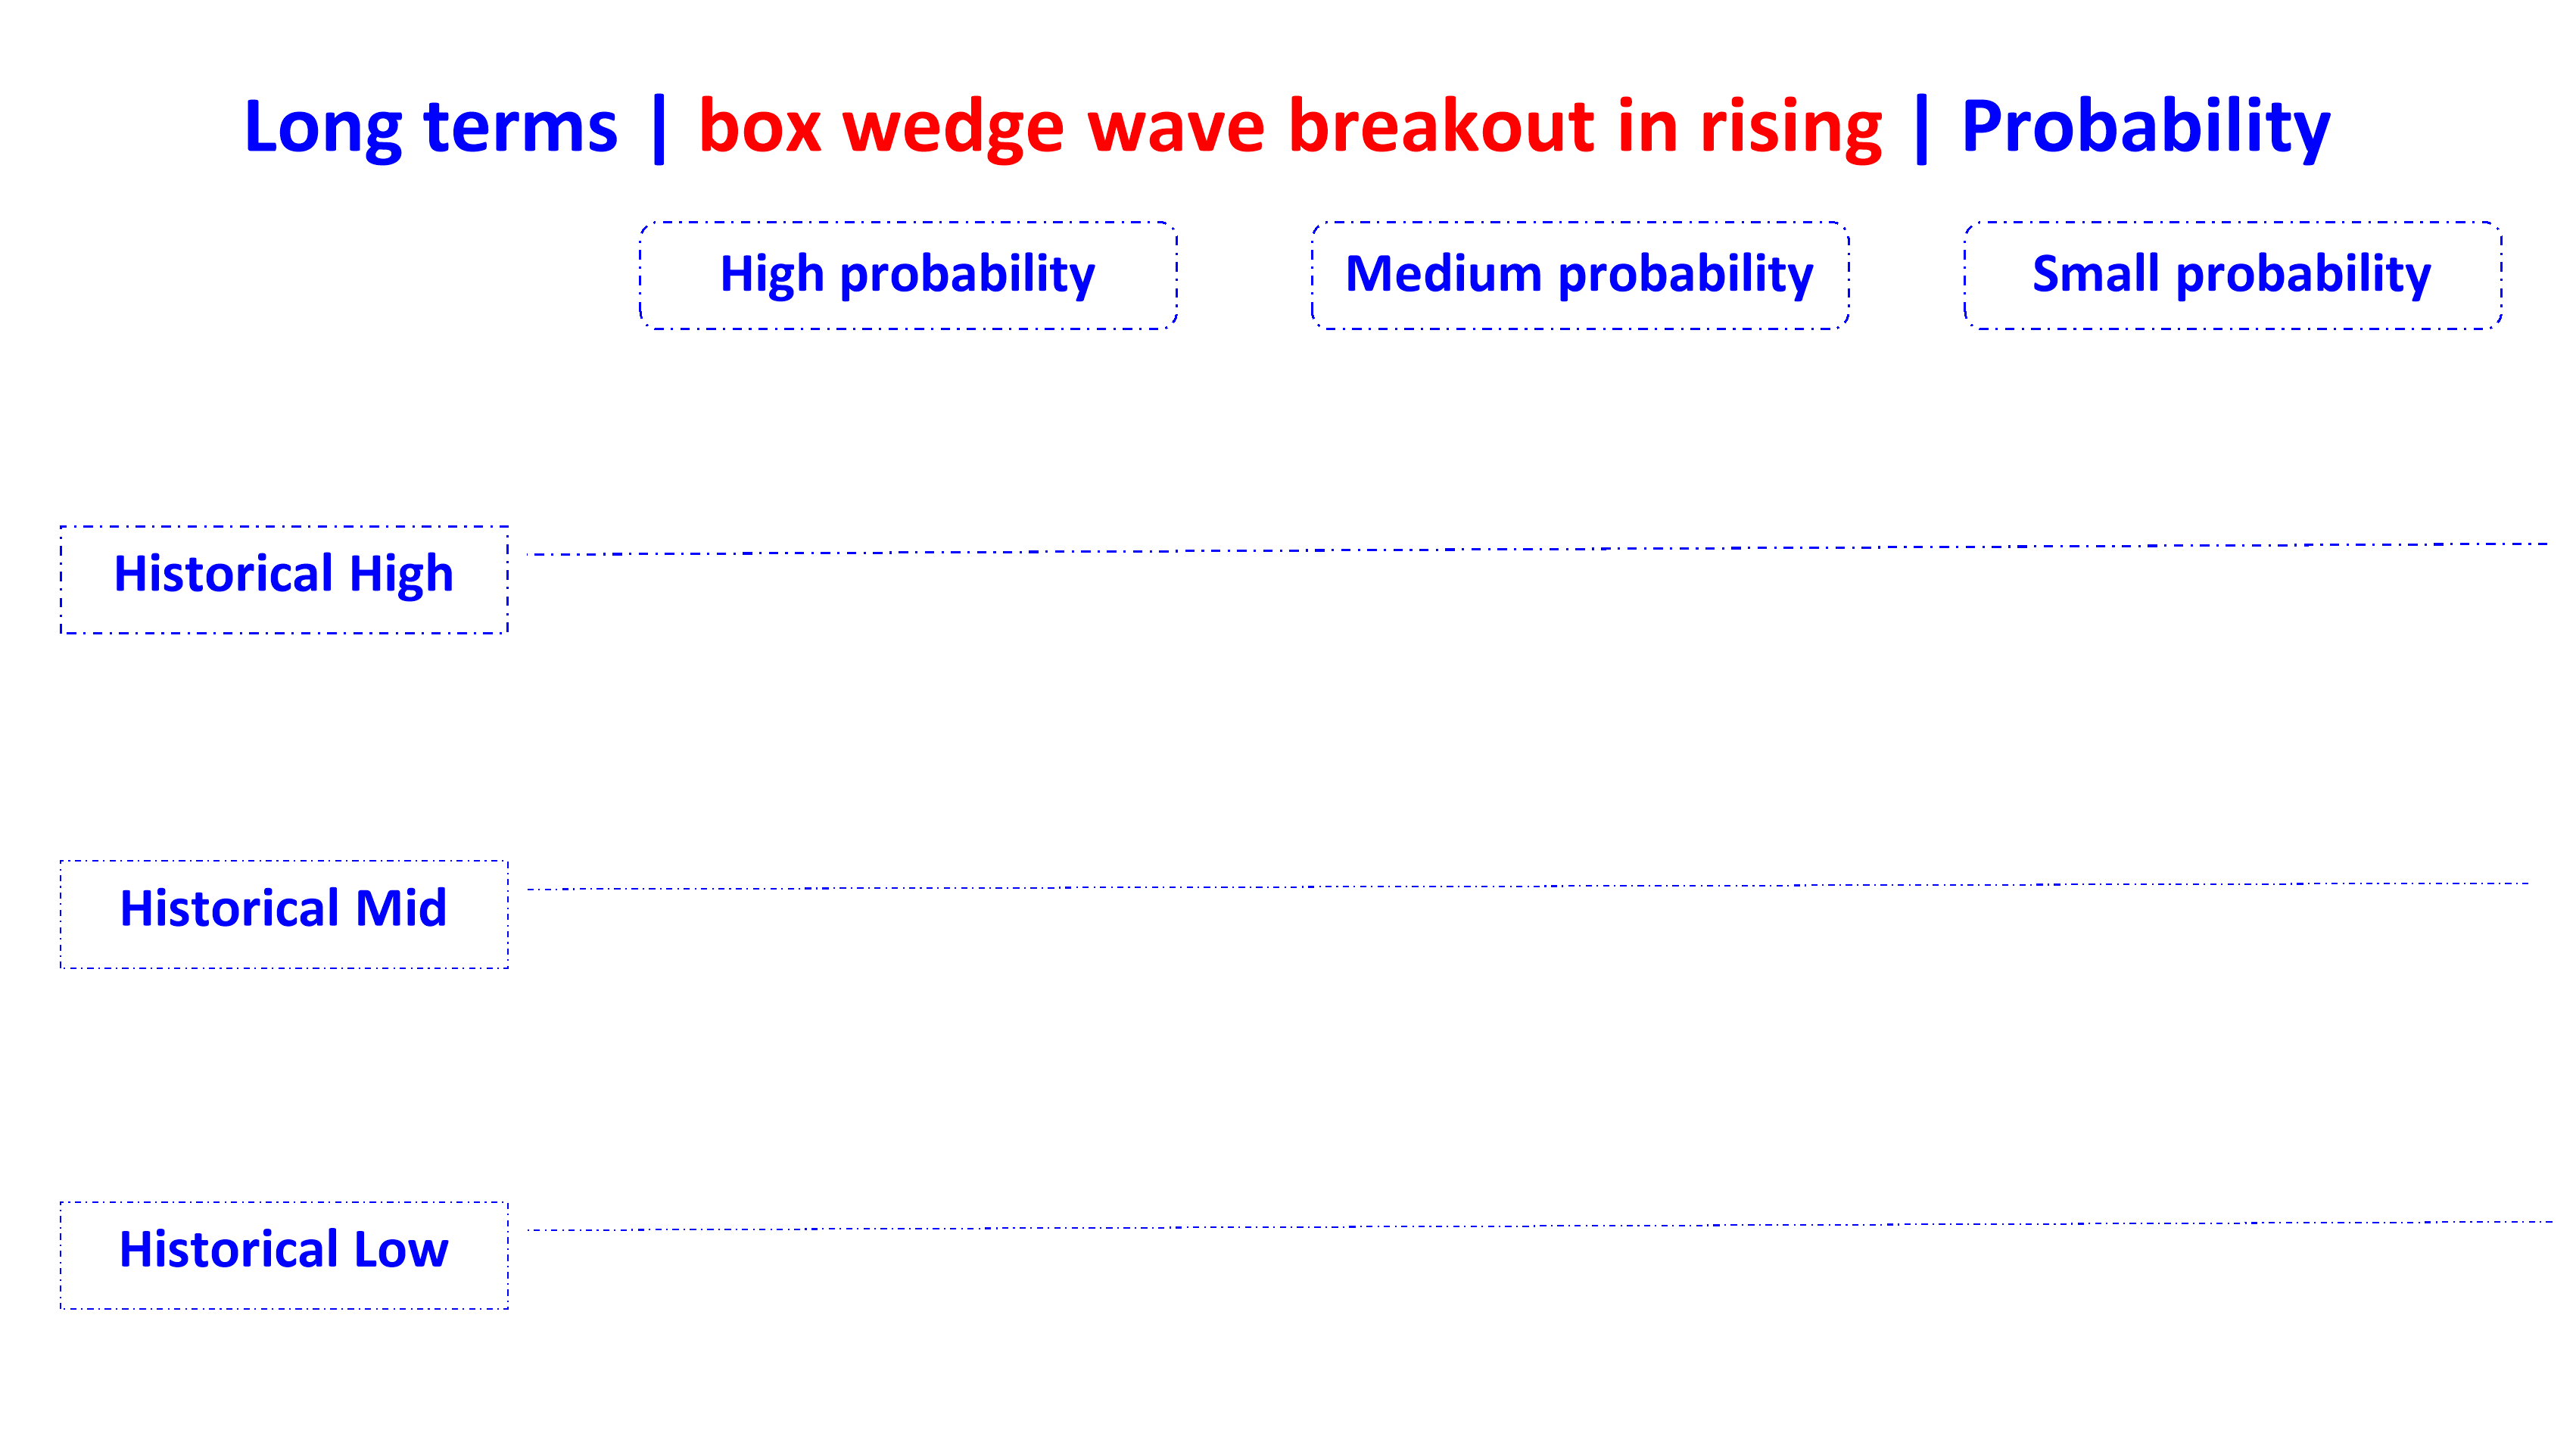 box wedge wave breakout in rising en